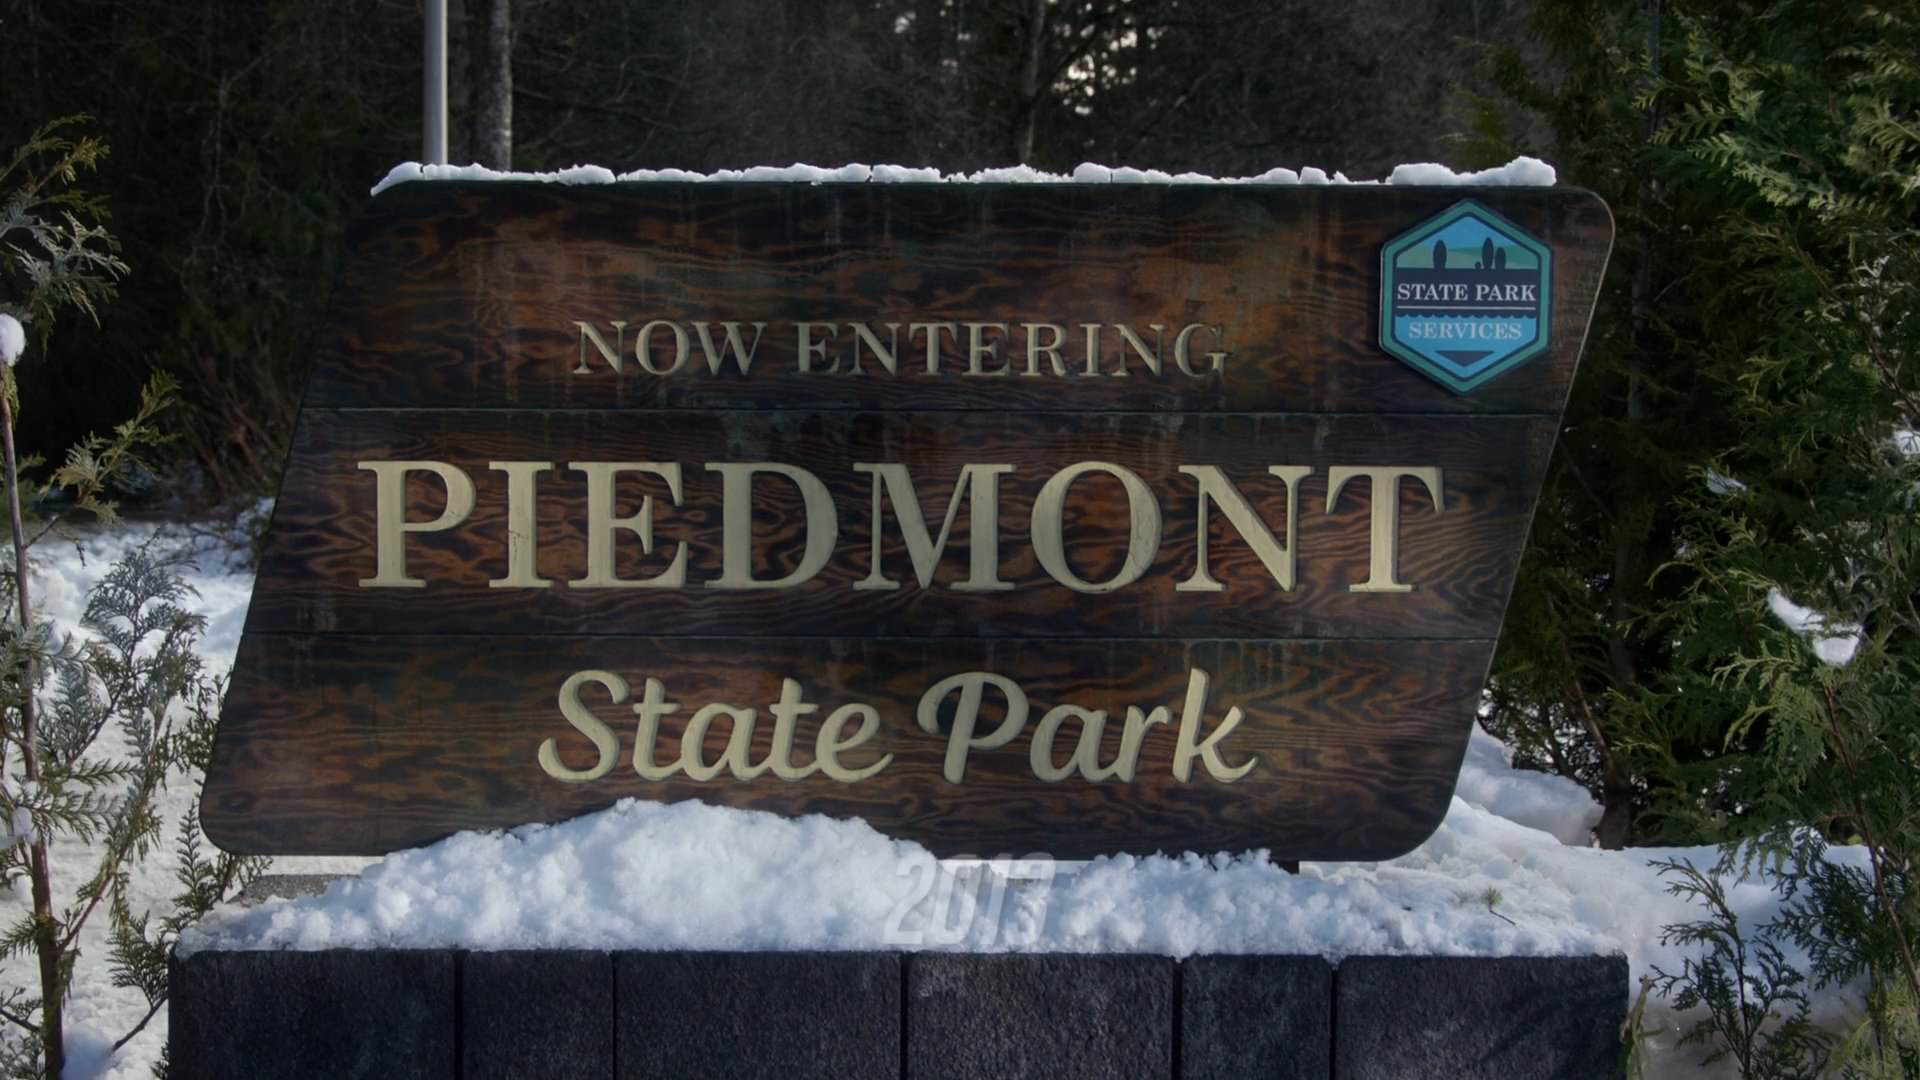 Piedmont - Wikipedia